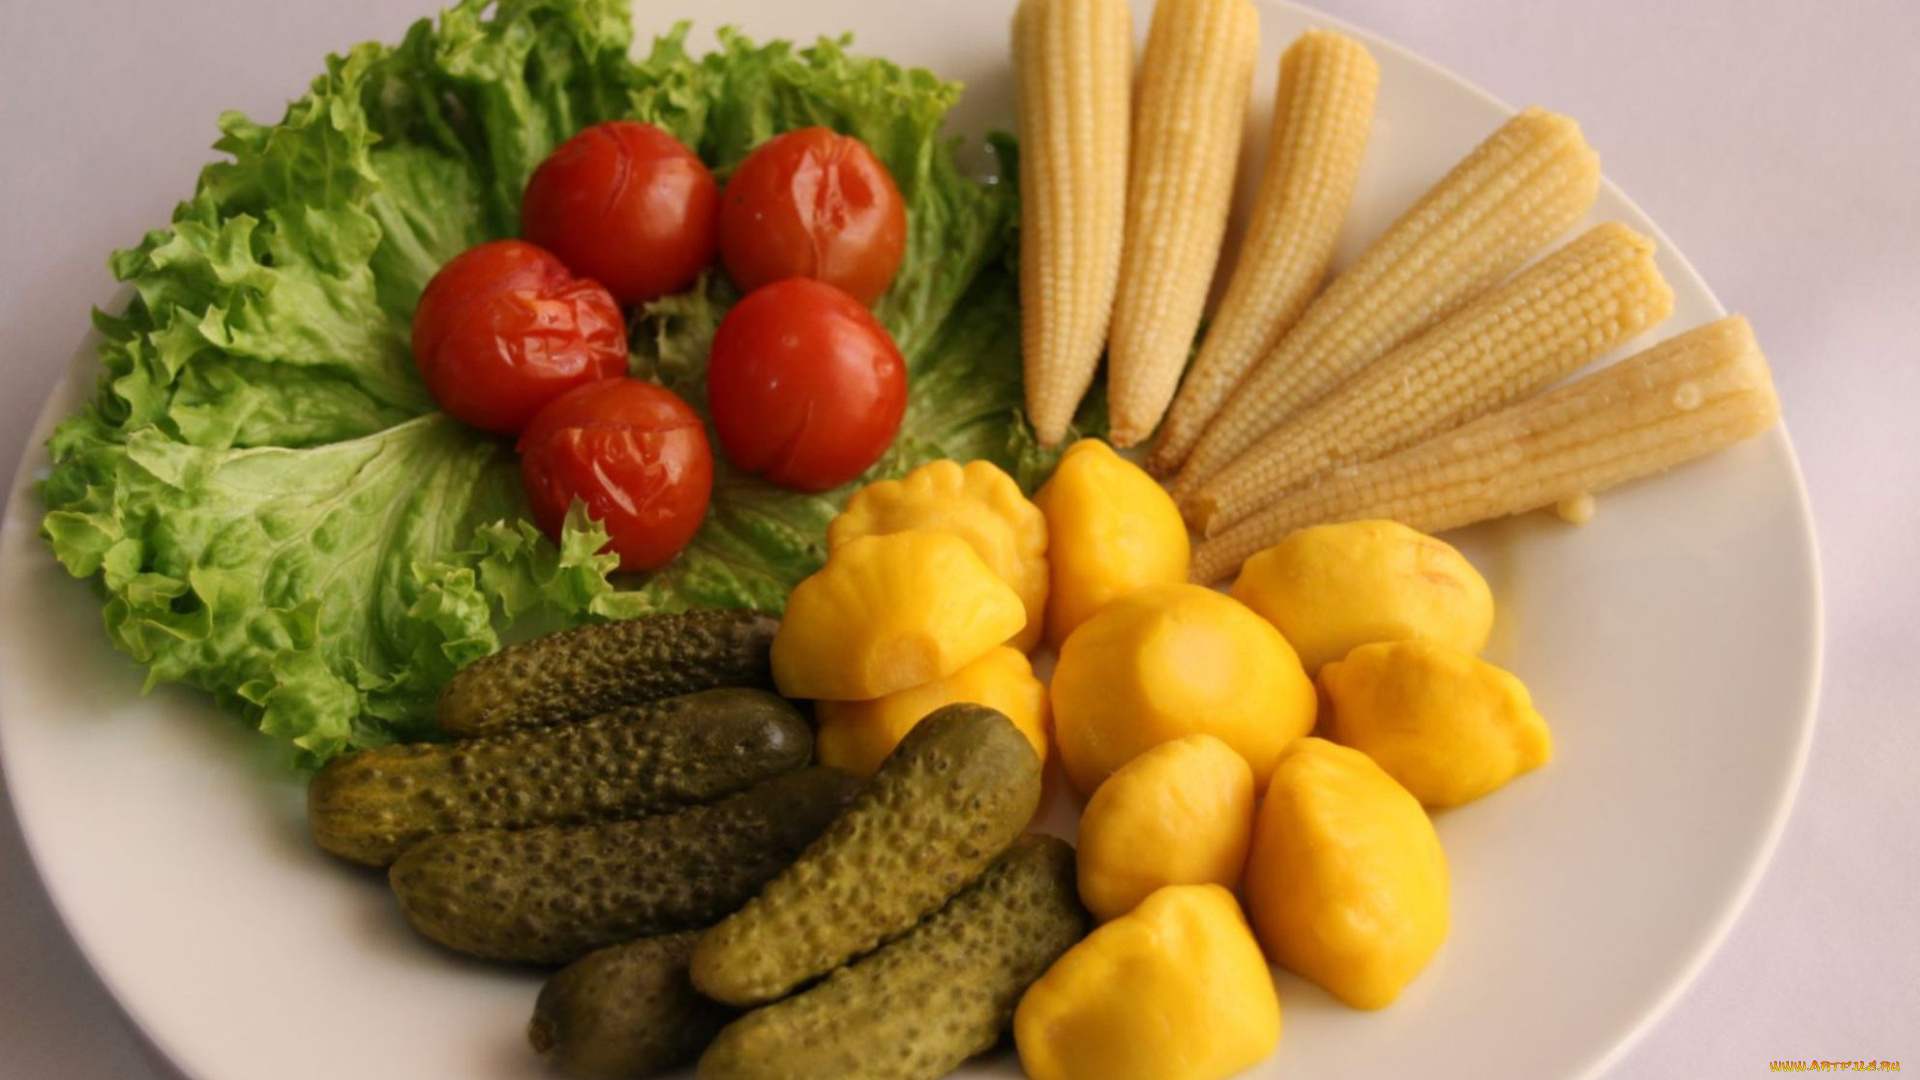 еда, консервация, кукуруза, томаты, соленья, зелень, огурцы, помидоры